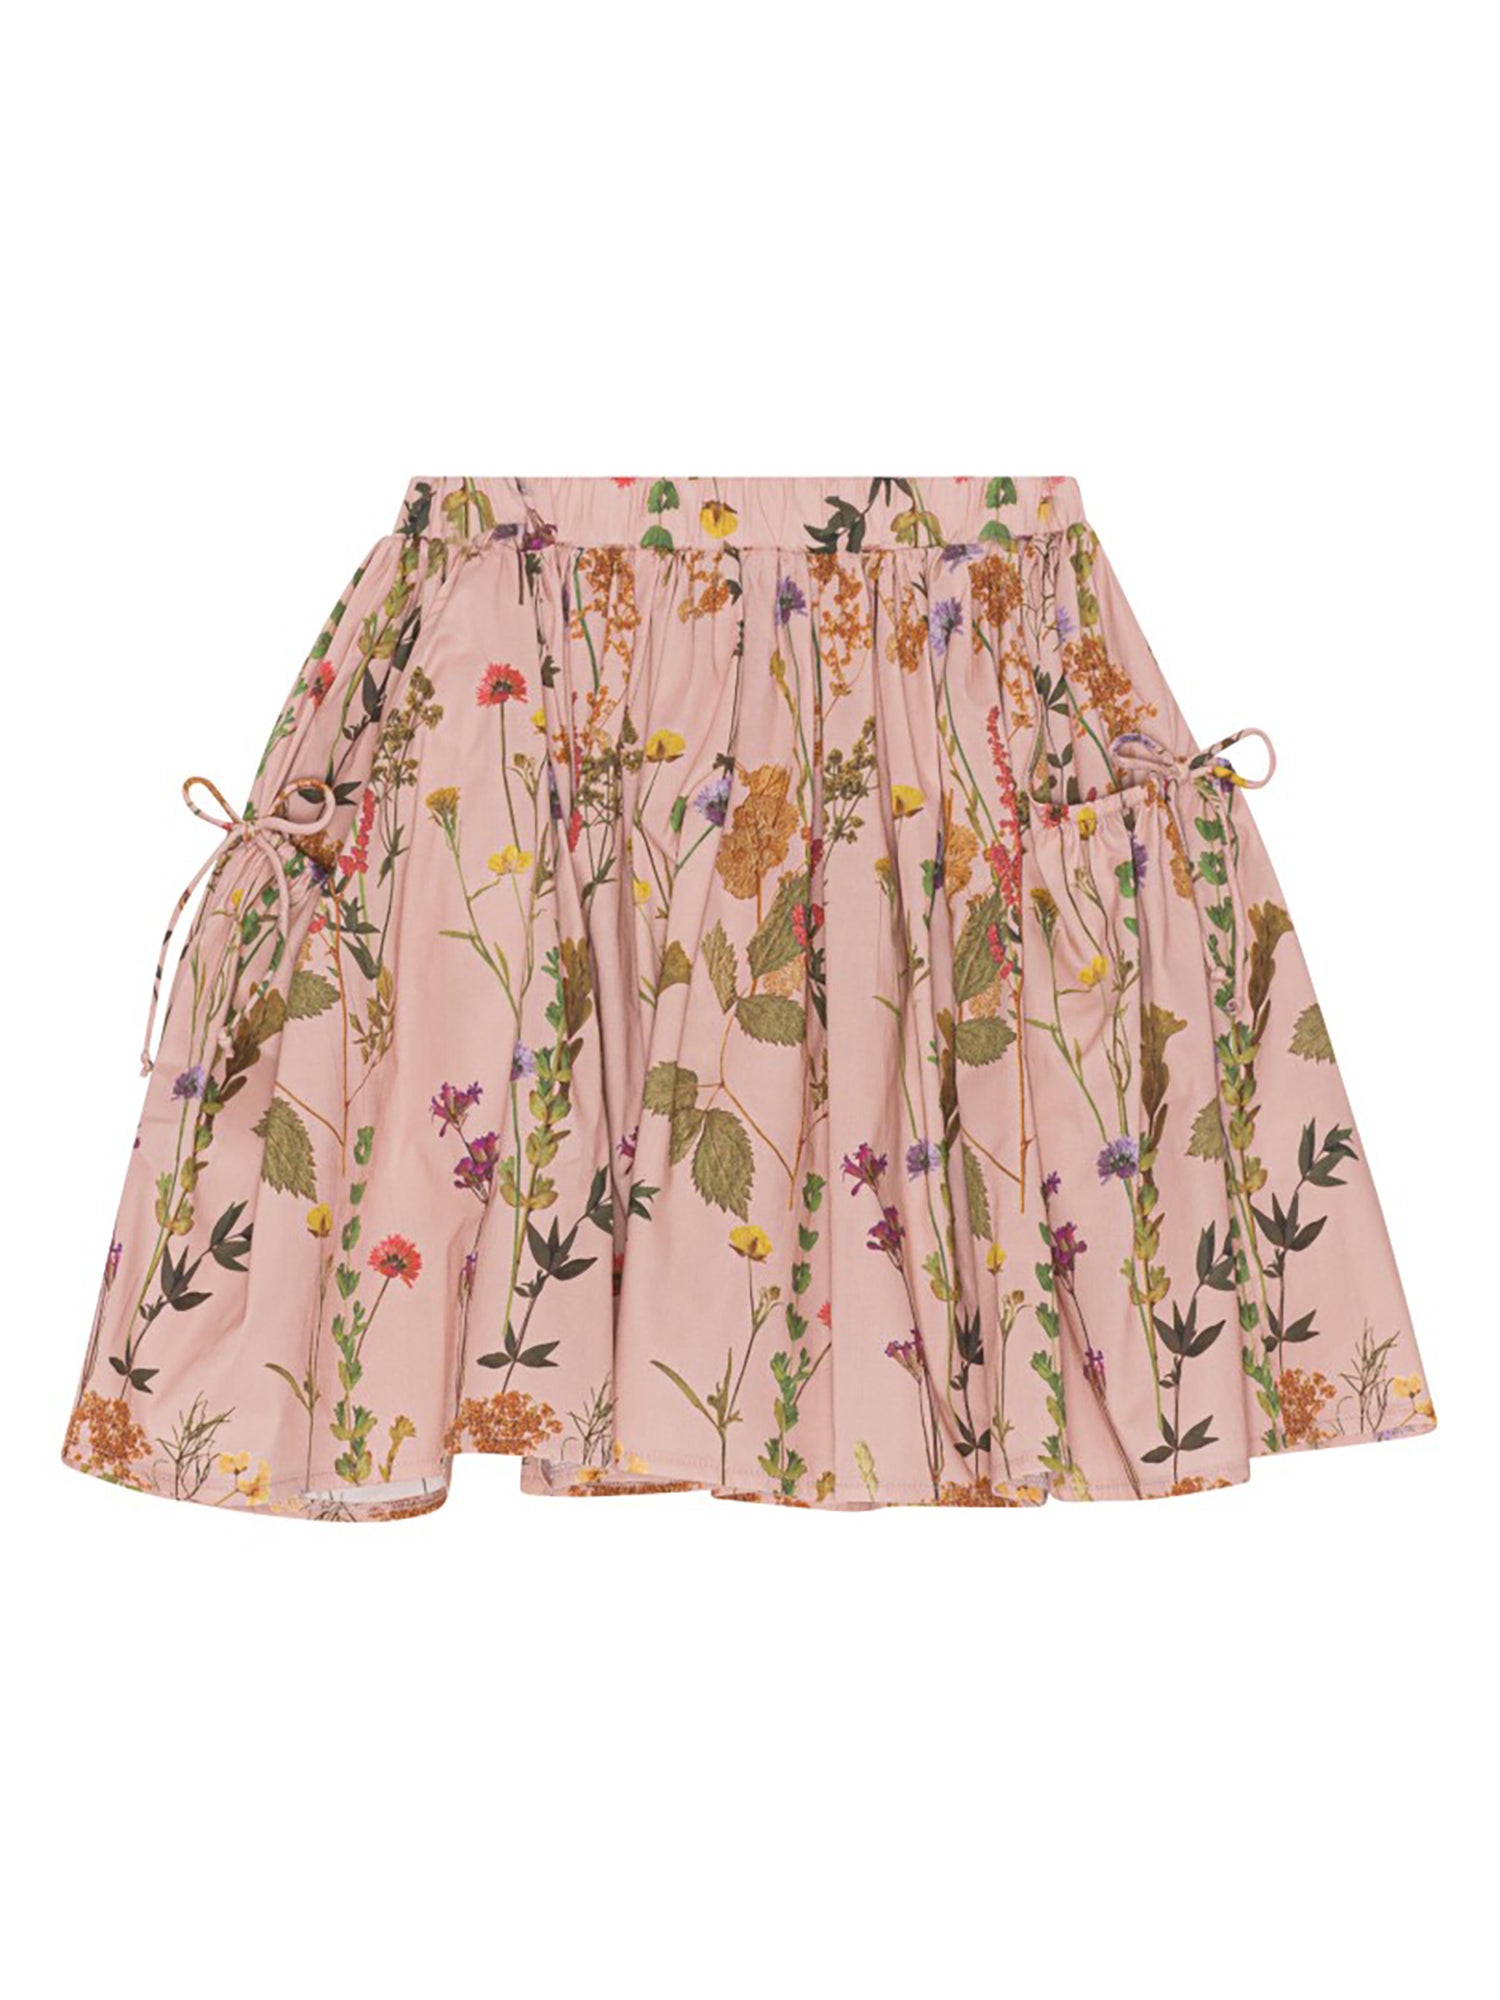 Christina Rohde Jungle Print Skirt - Skirts